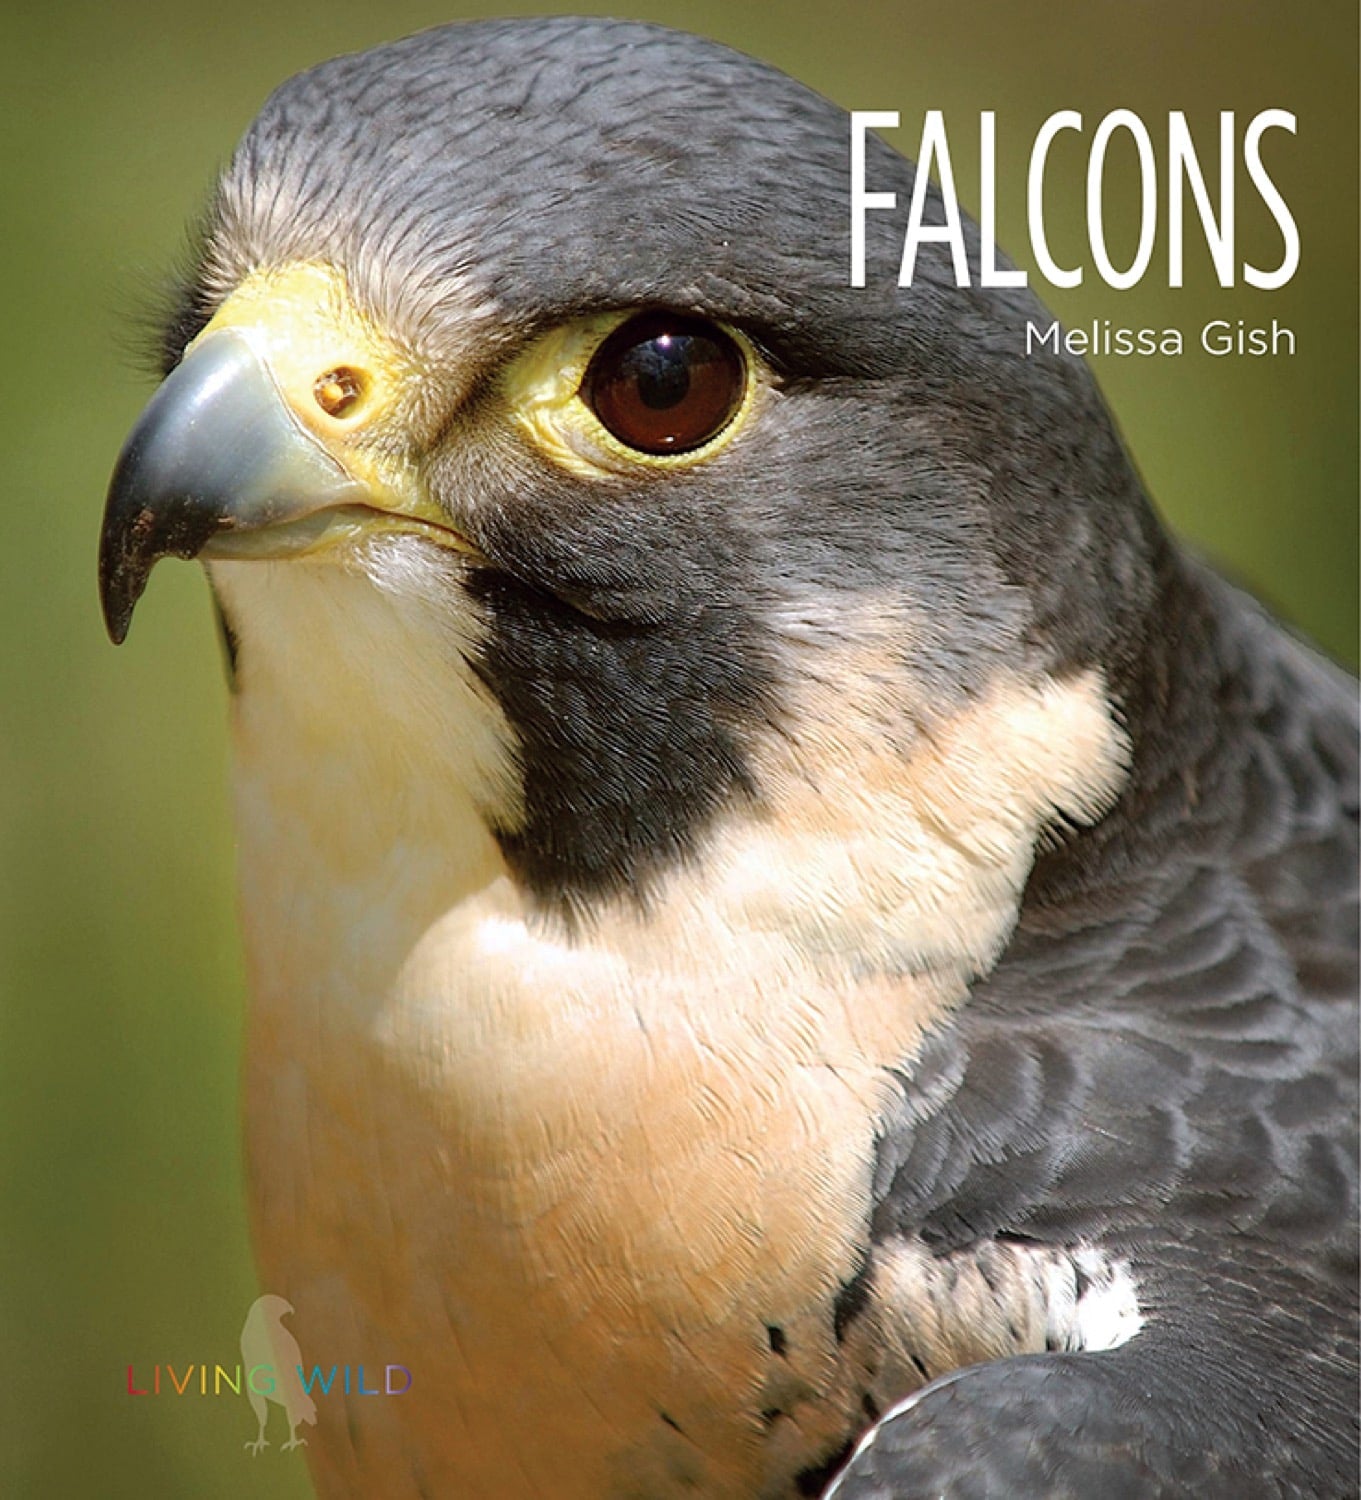 Living Wild - Classic Edition: Falcons